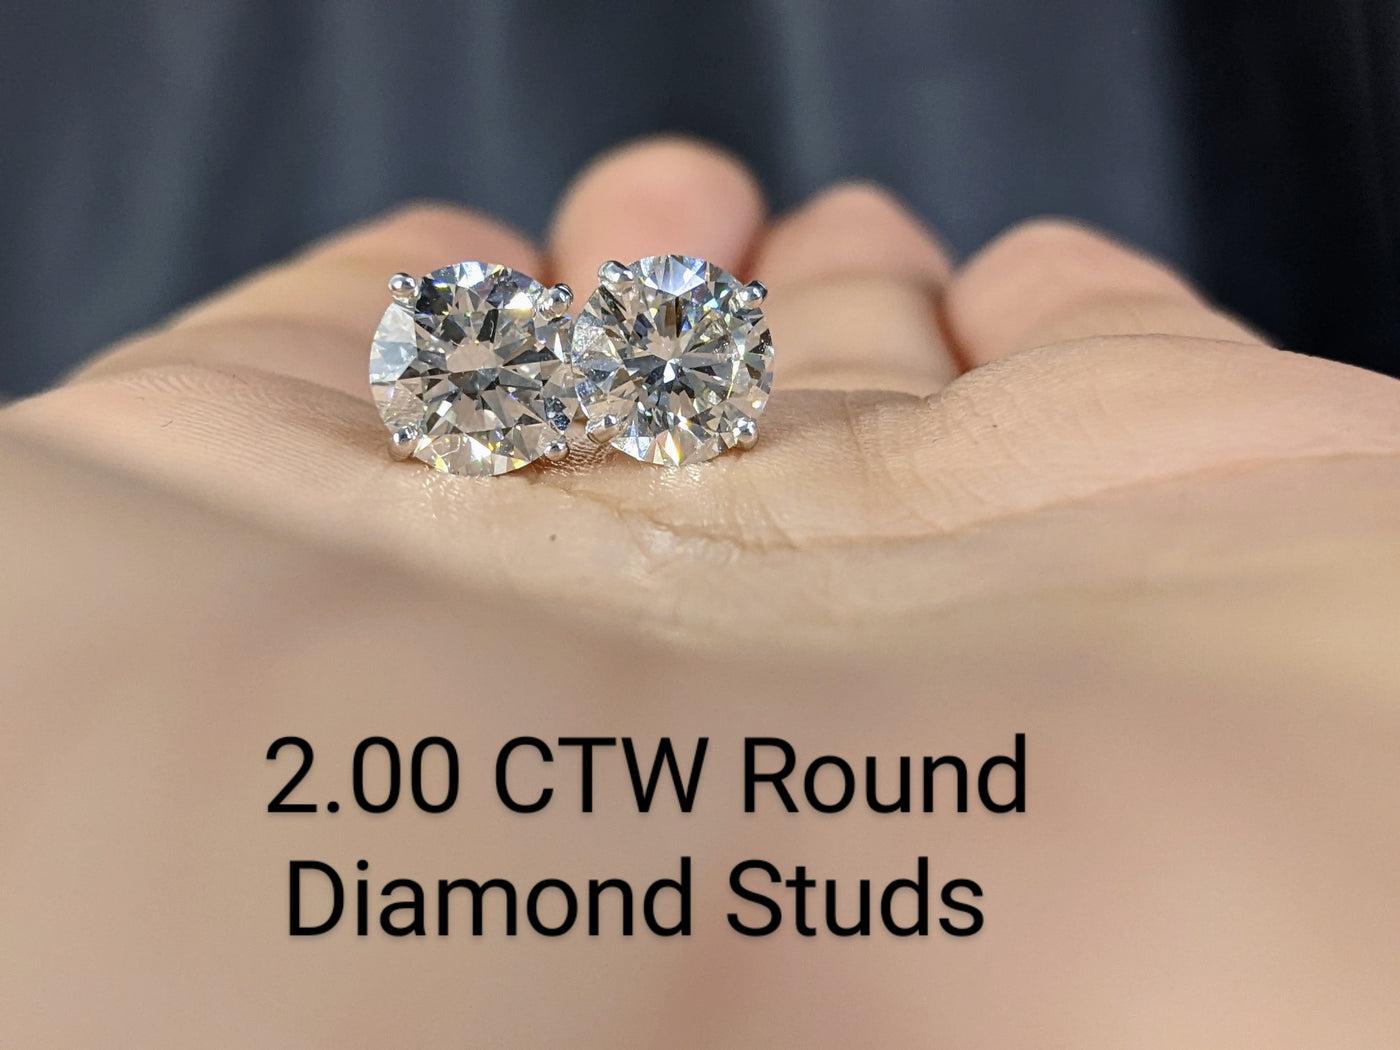 Platinum 4-Prong Round Cut Diamond Stud Earrings 2.00 ct. tw.